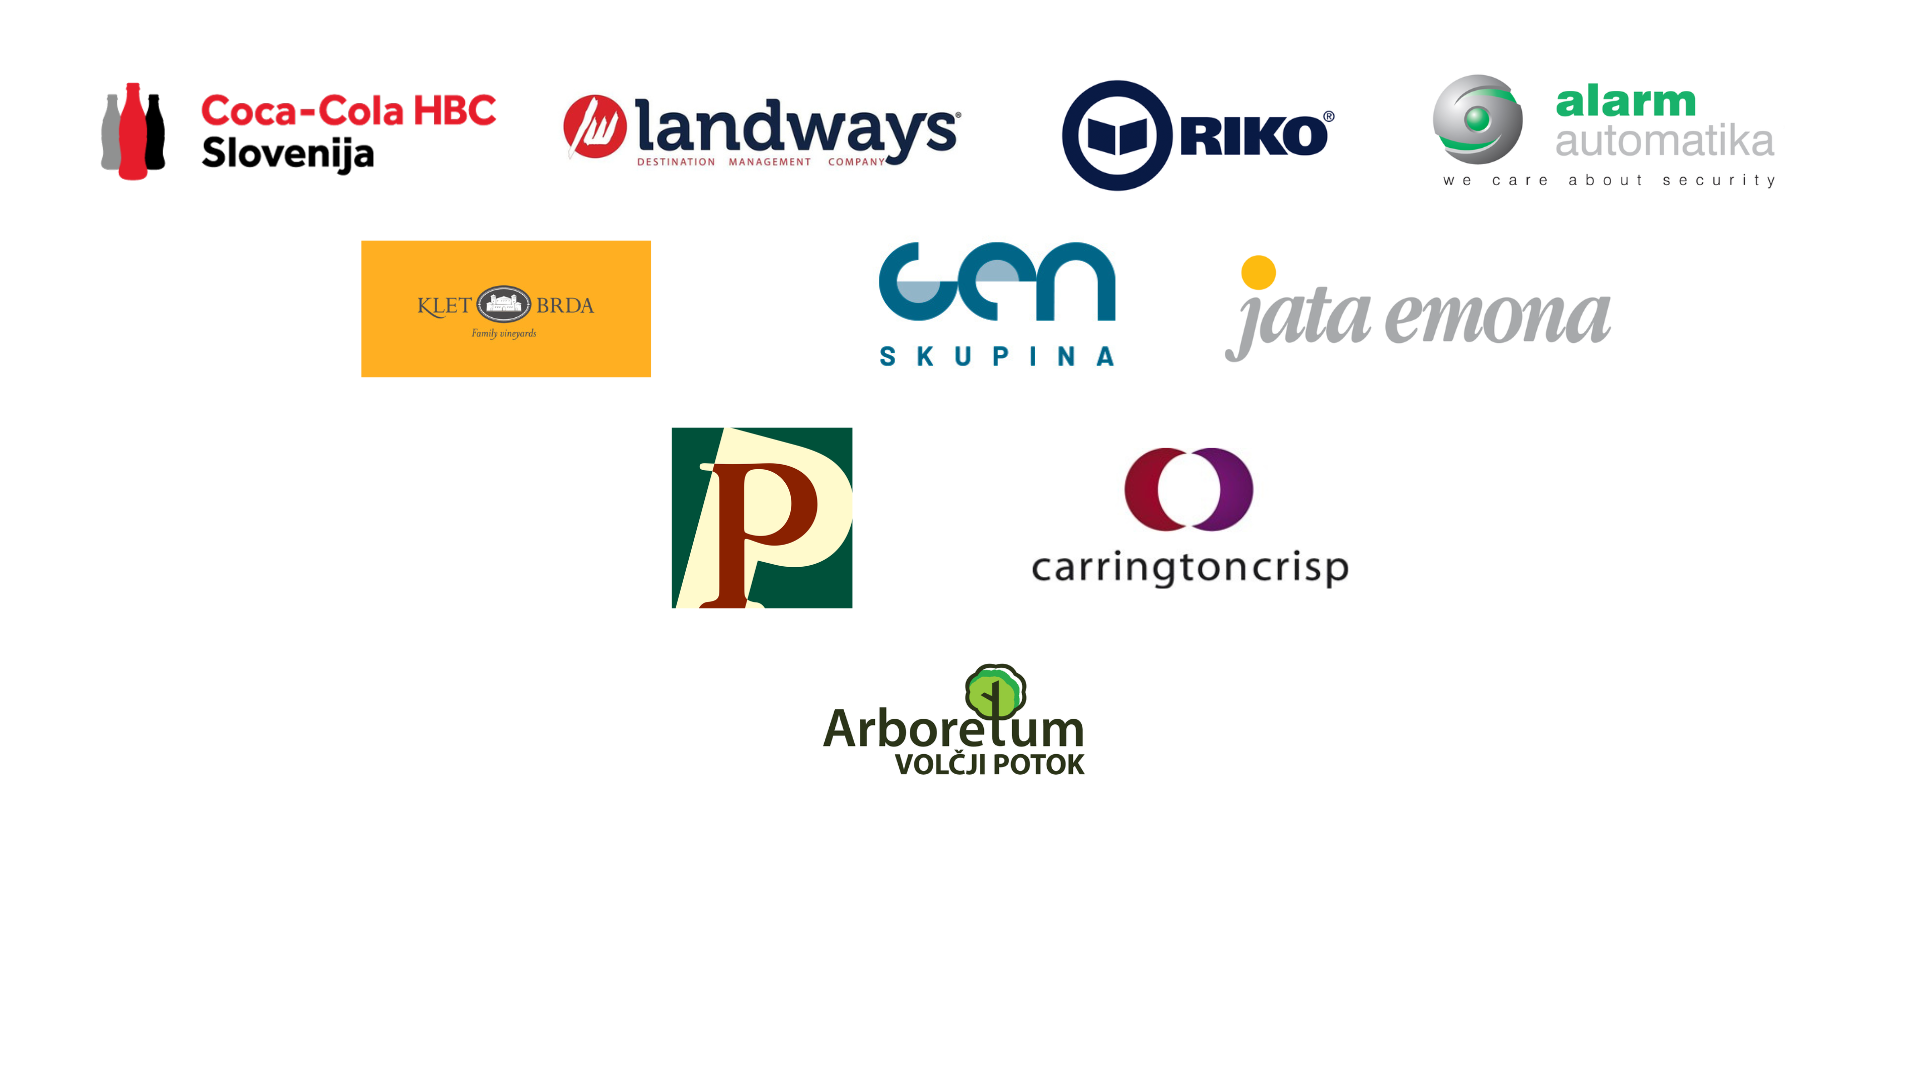 CEEMAN Annual Conference 2022 sponsors